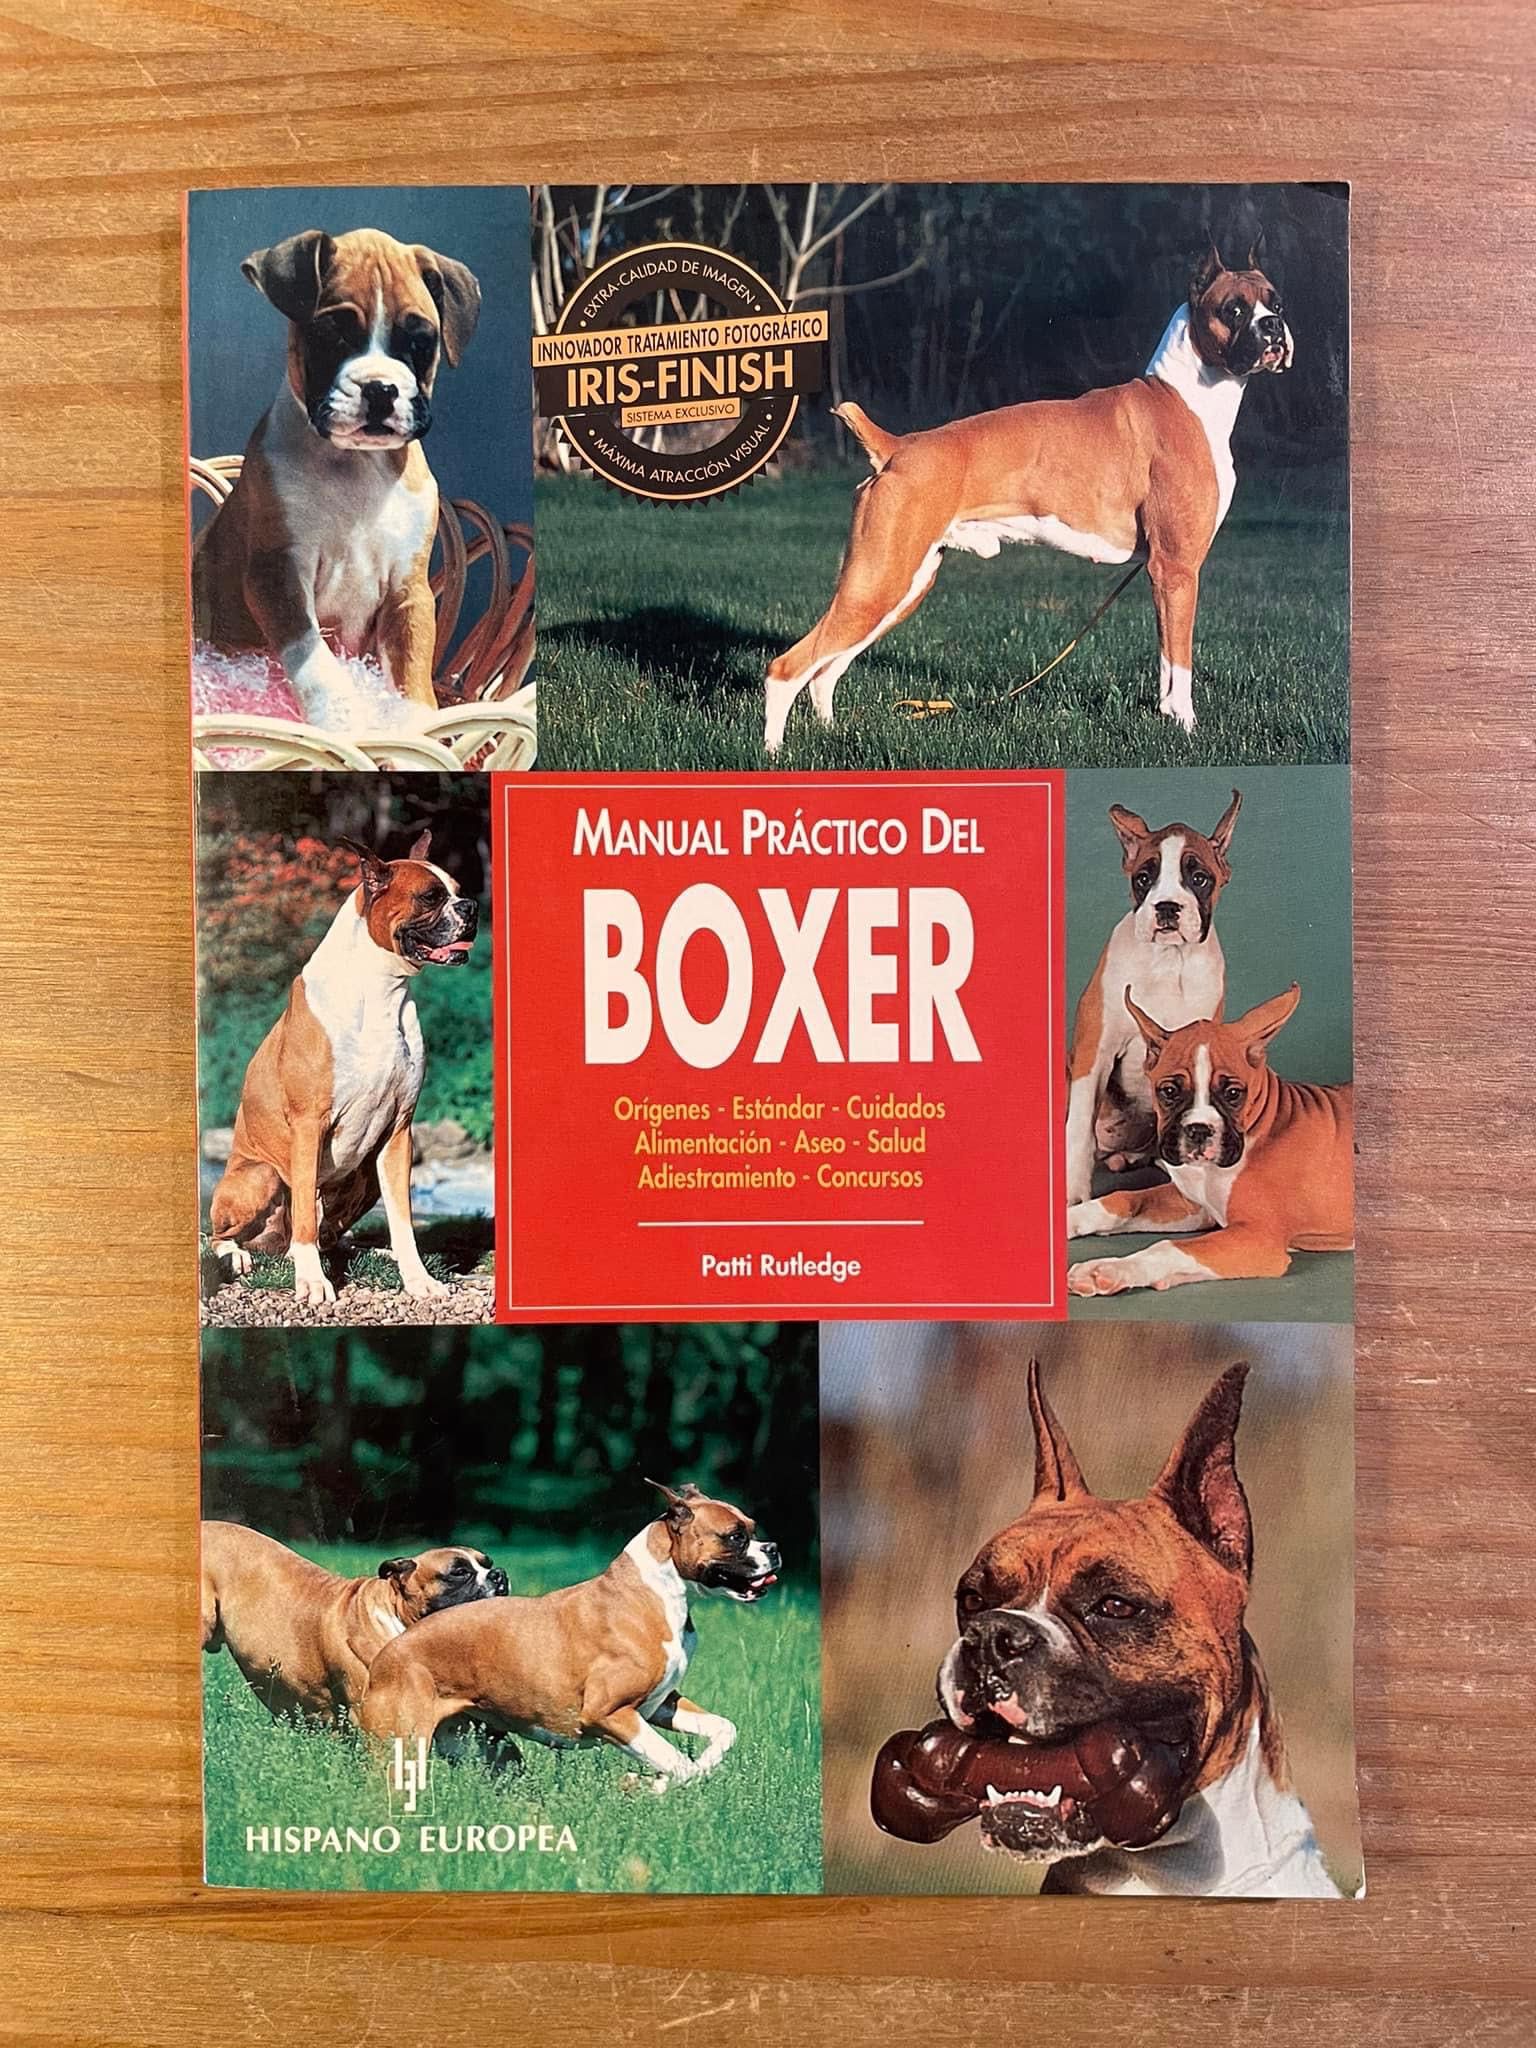 Manual Practico del Boxer - Patti Rutledge (portes grátis)